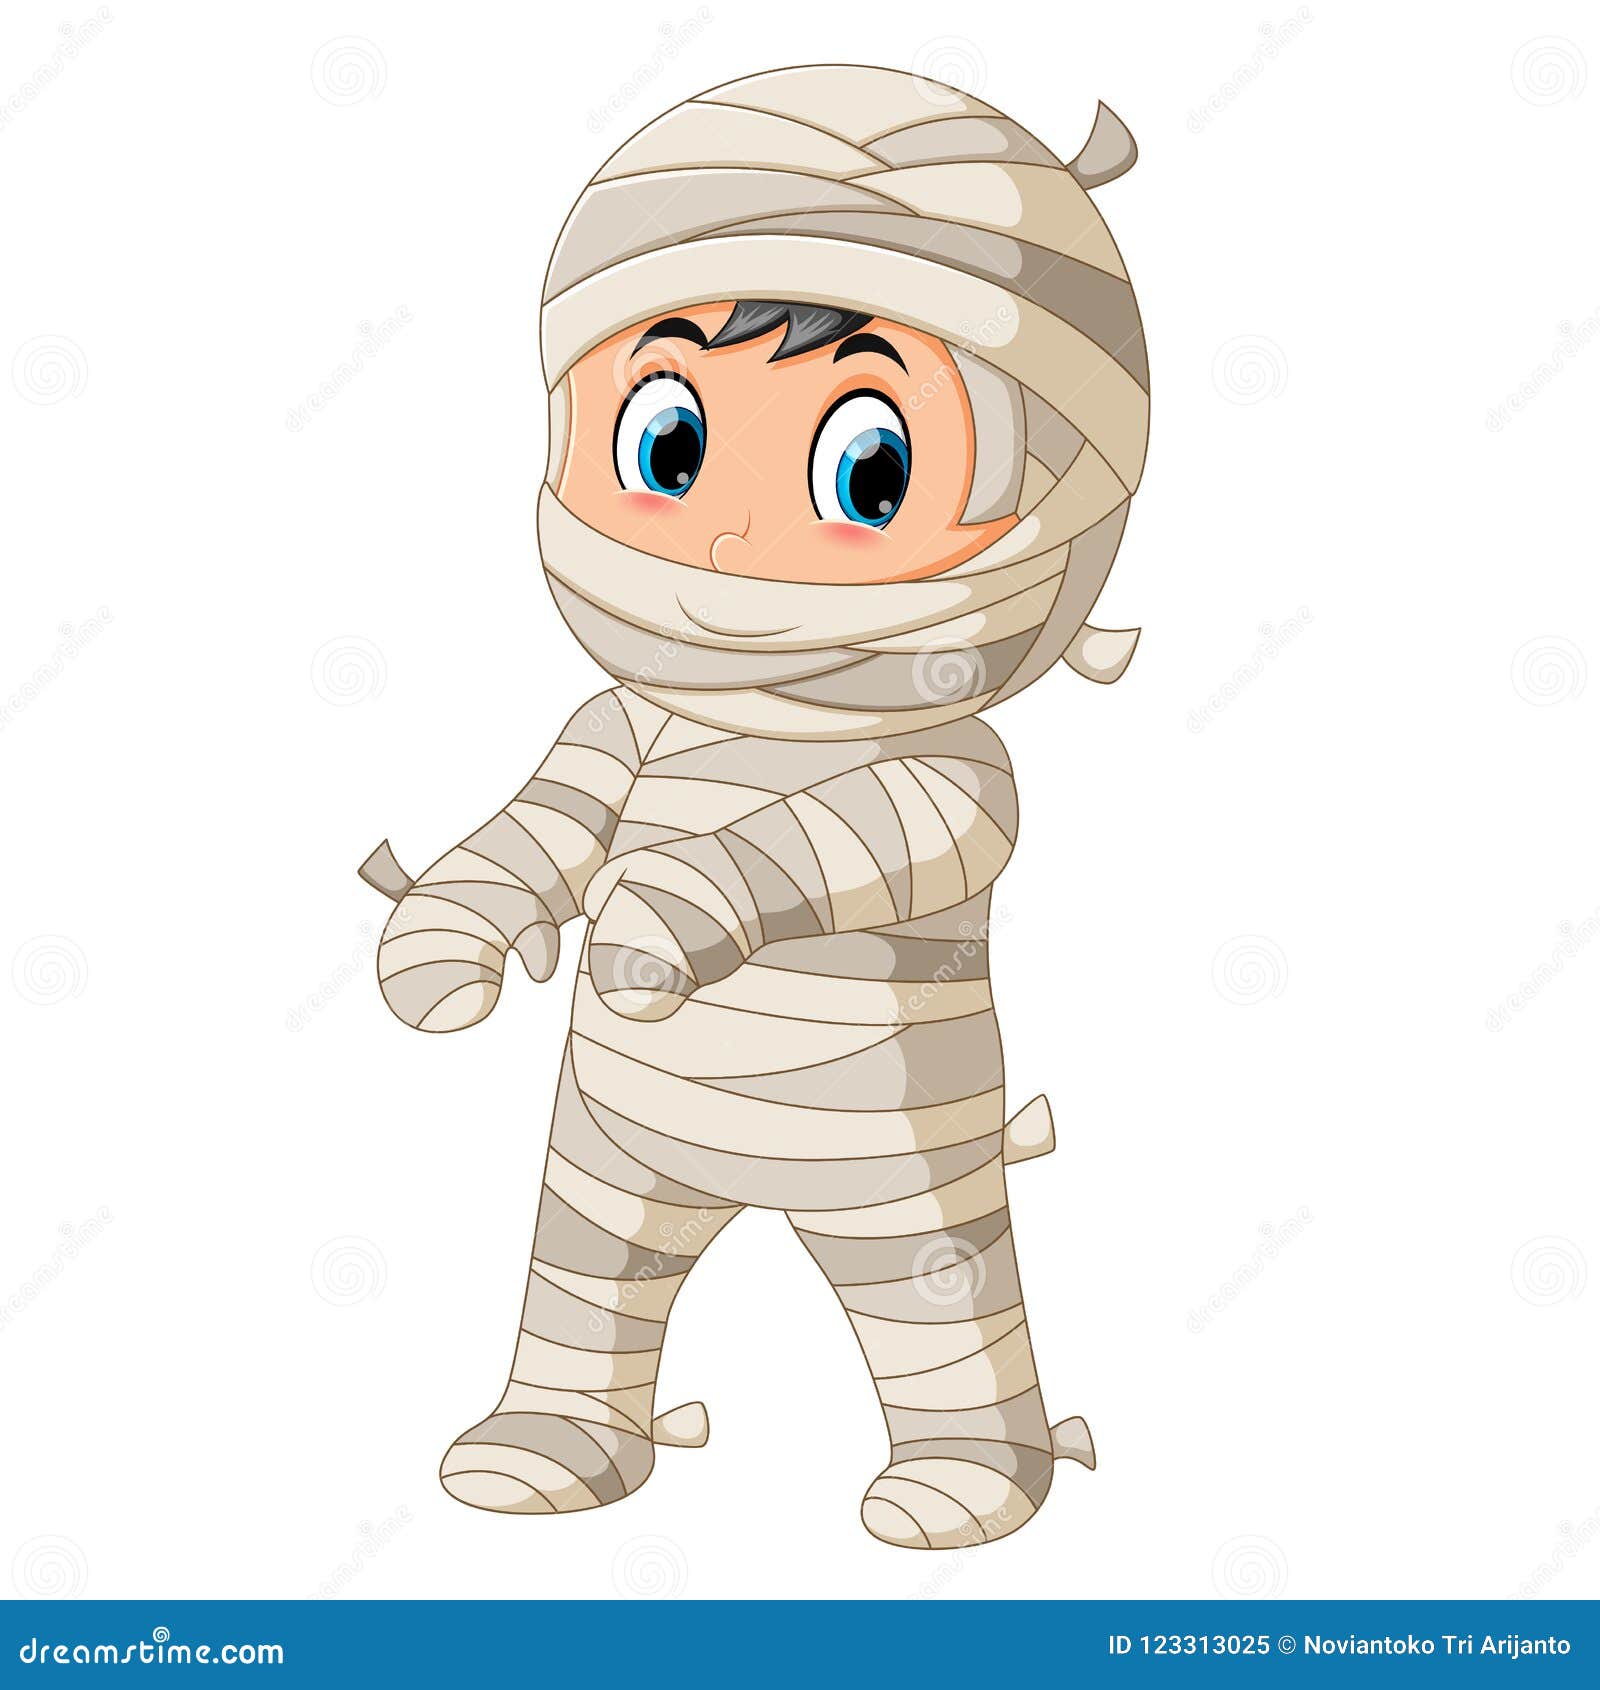 Mummy walking cartoon stock vector. Illustration of ancient - 123313025